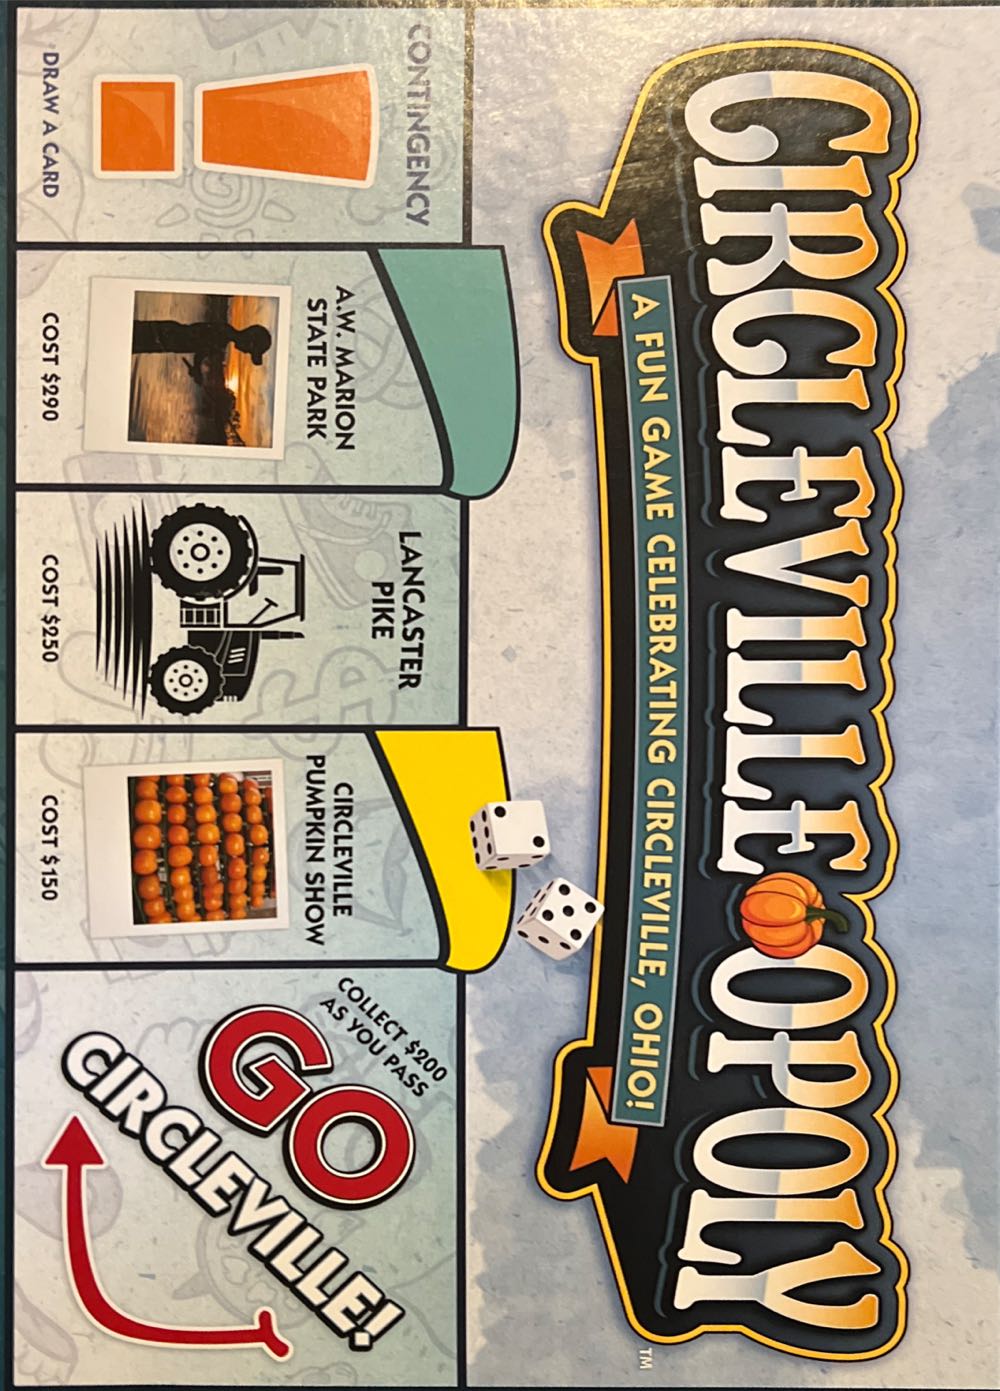 Circlevilleopoly  board game collectible [Barcode 730799014093] - Main Image 1